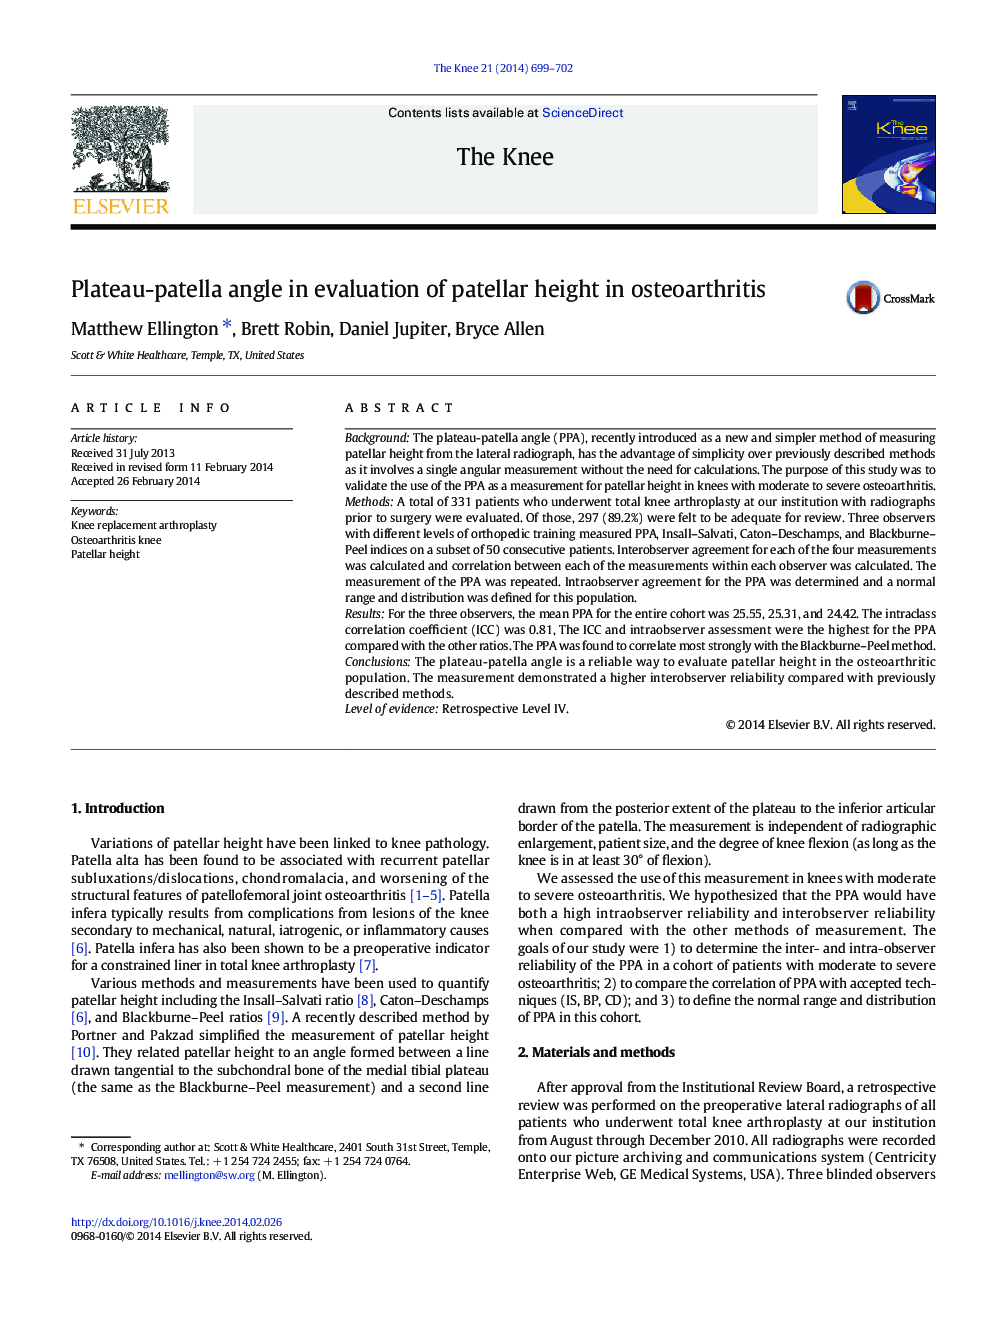 Plateau-patella angle in evaluation of patellar height in osteoarthritis